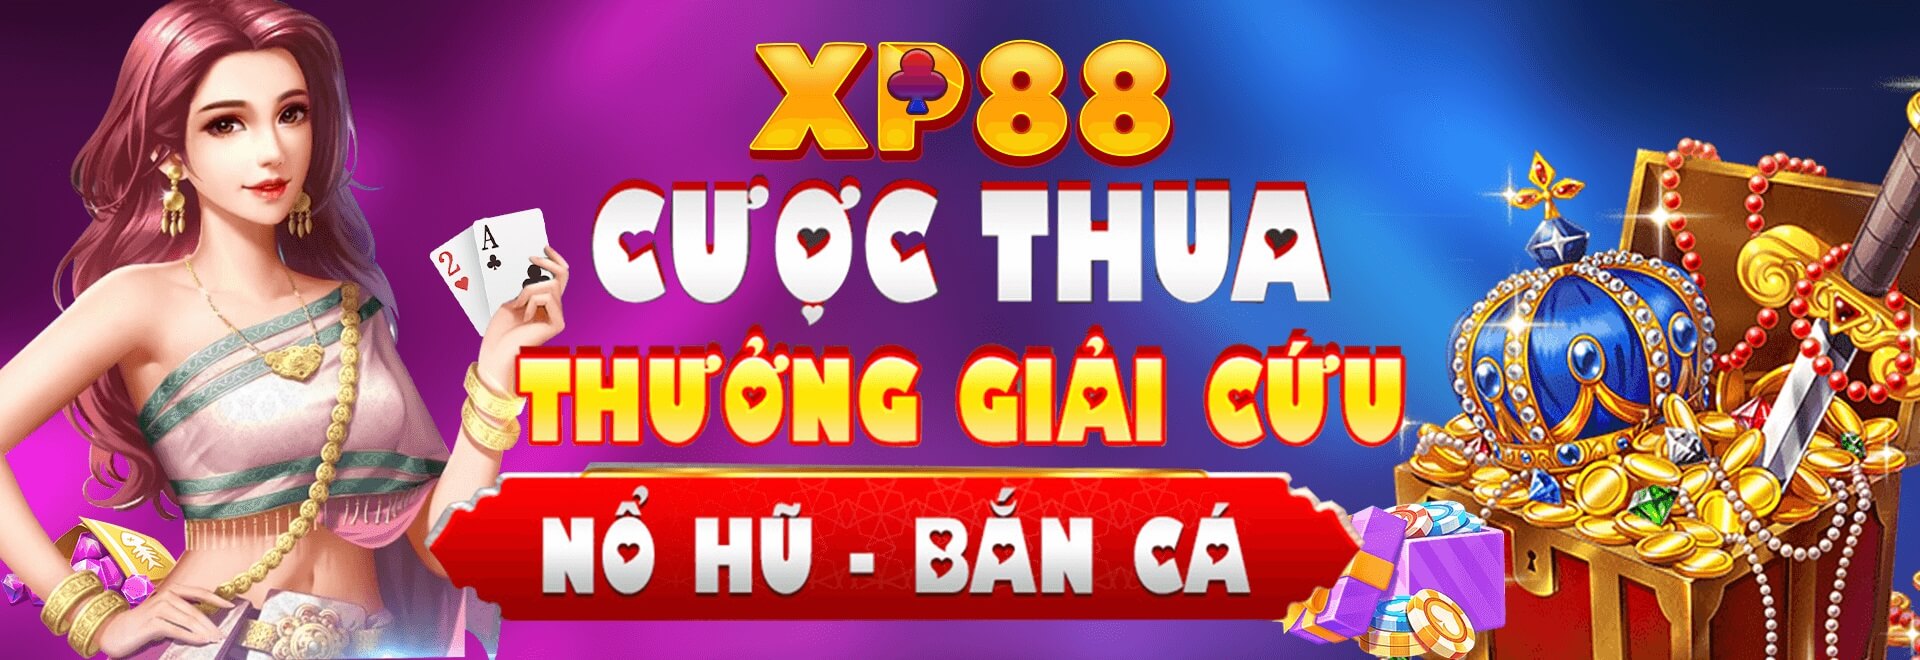 banner xp88